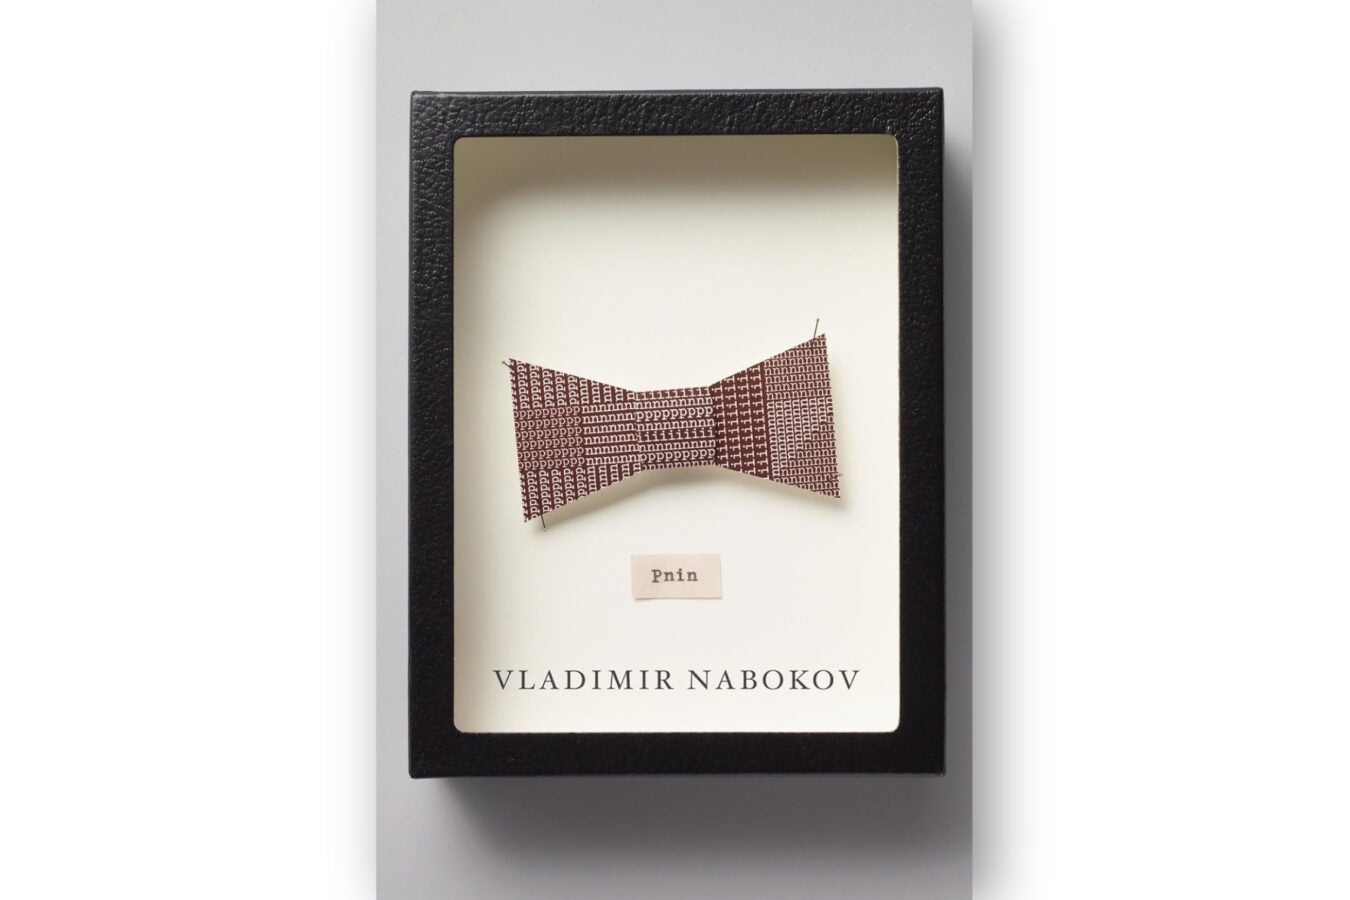 Book cover: "Pnin" by Vladimir Nabokov.